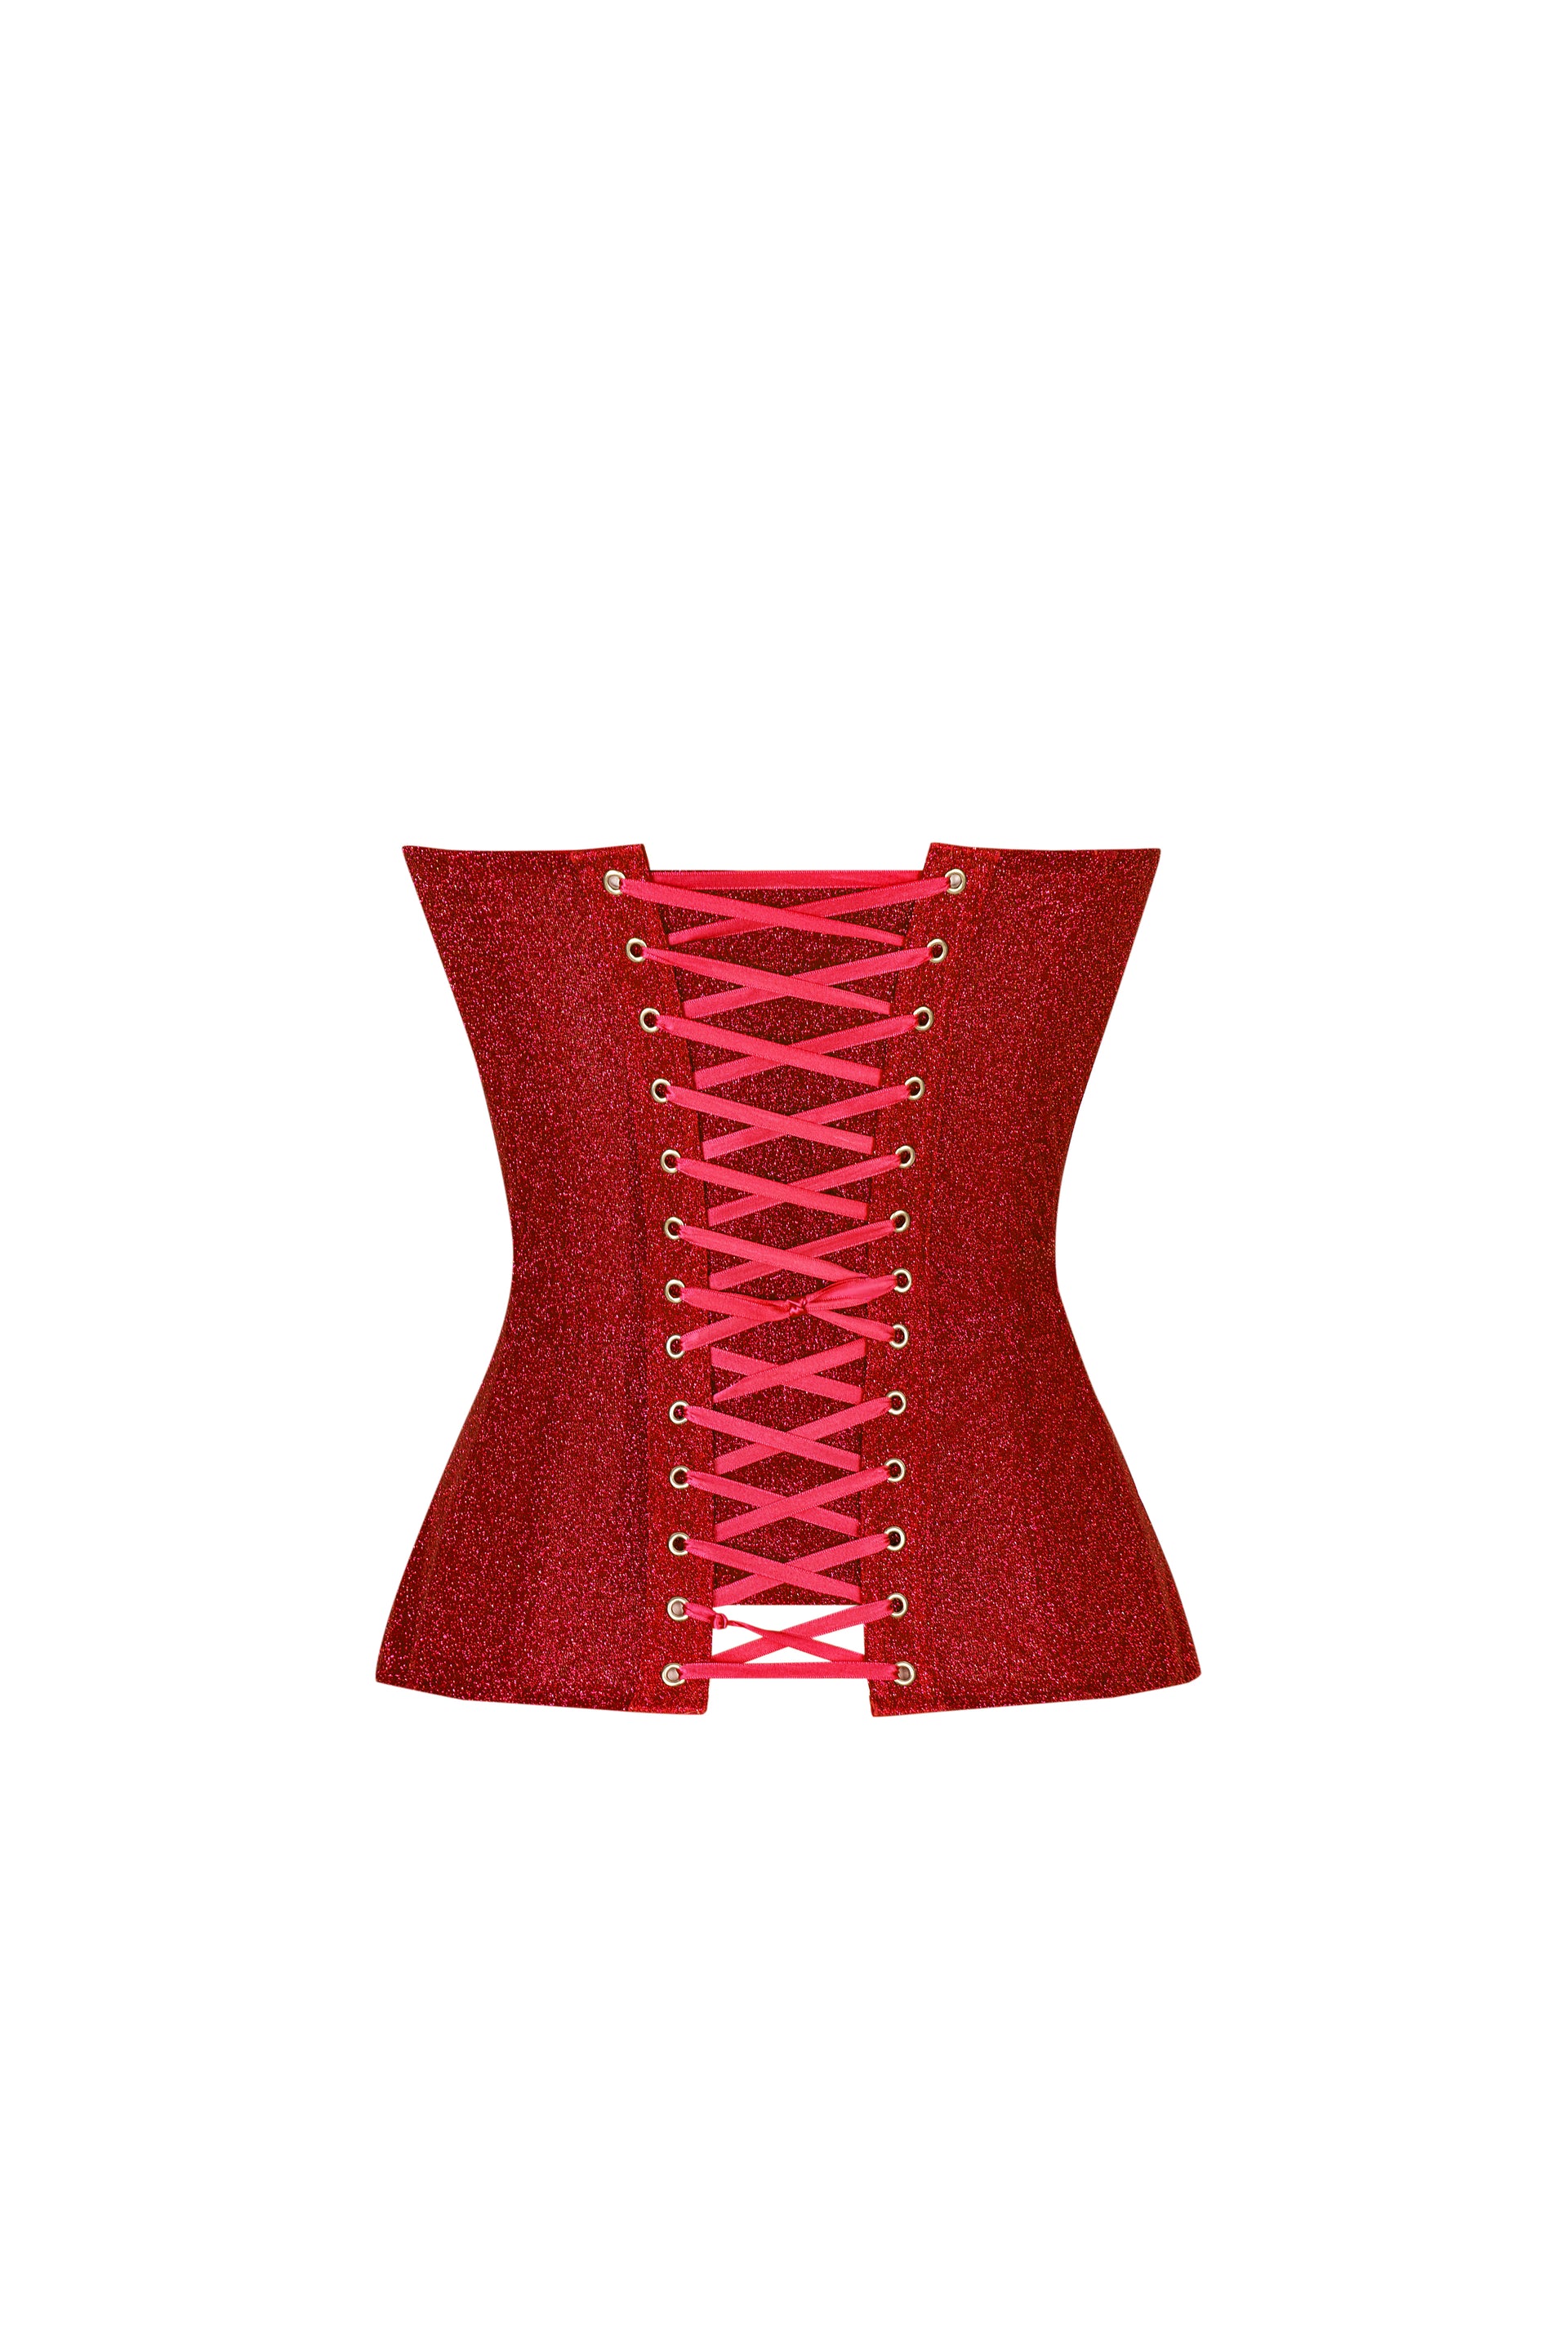 Brilliance drop Red corset - STATNAIA